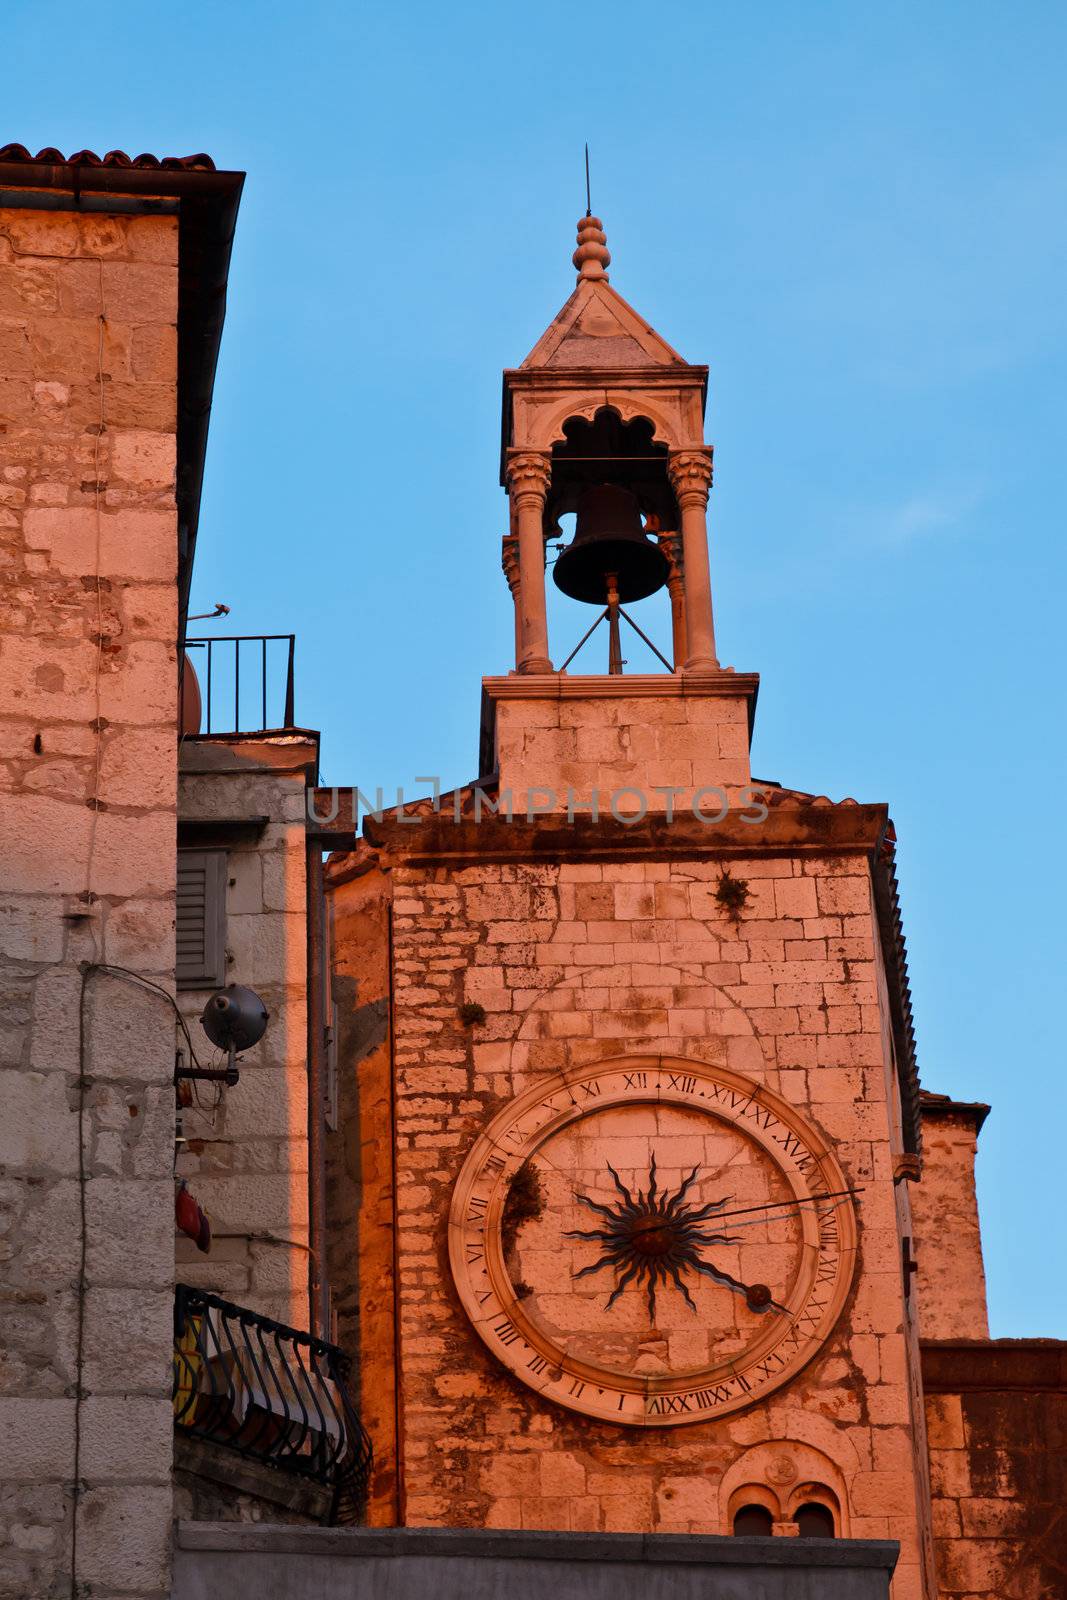 Iron Gate in Diocletian Palace in Split, Croatia